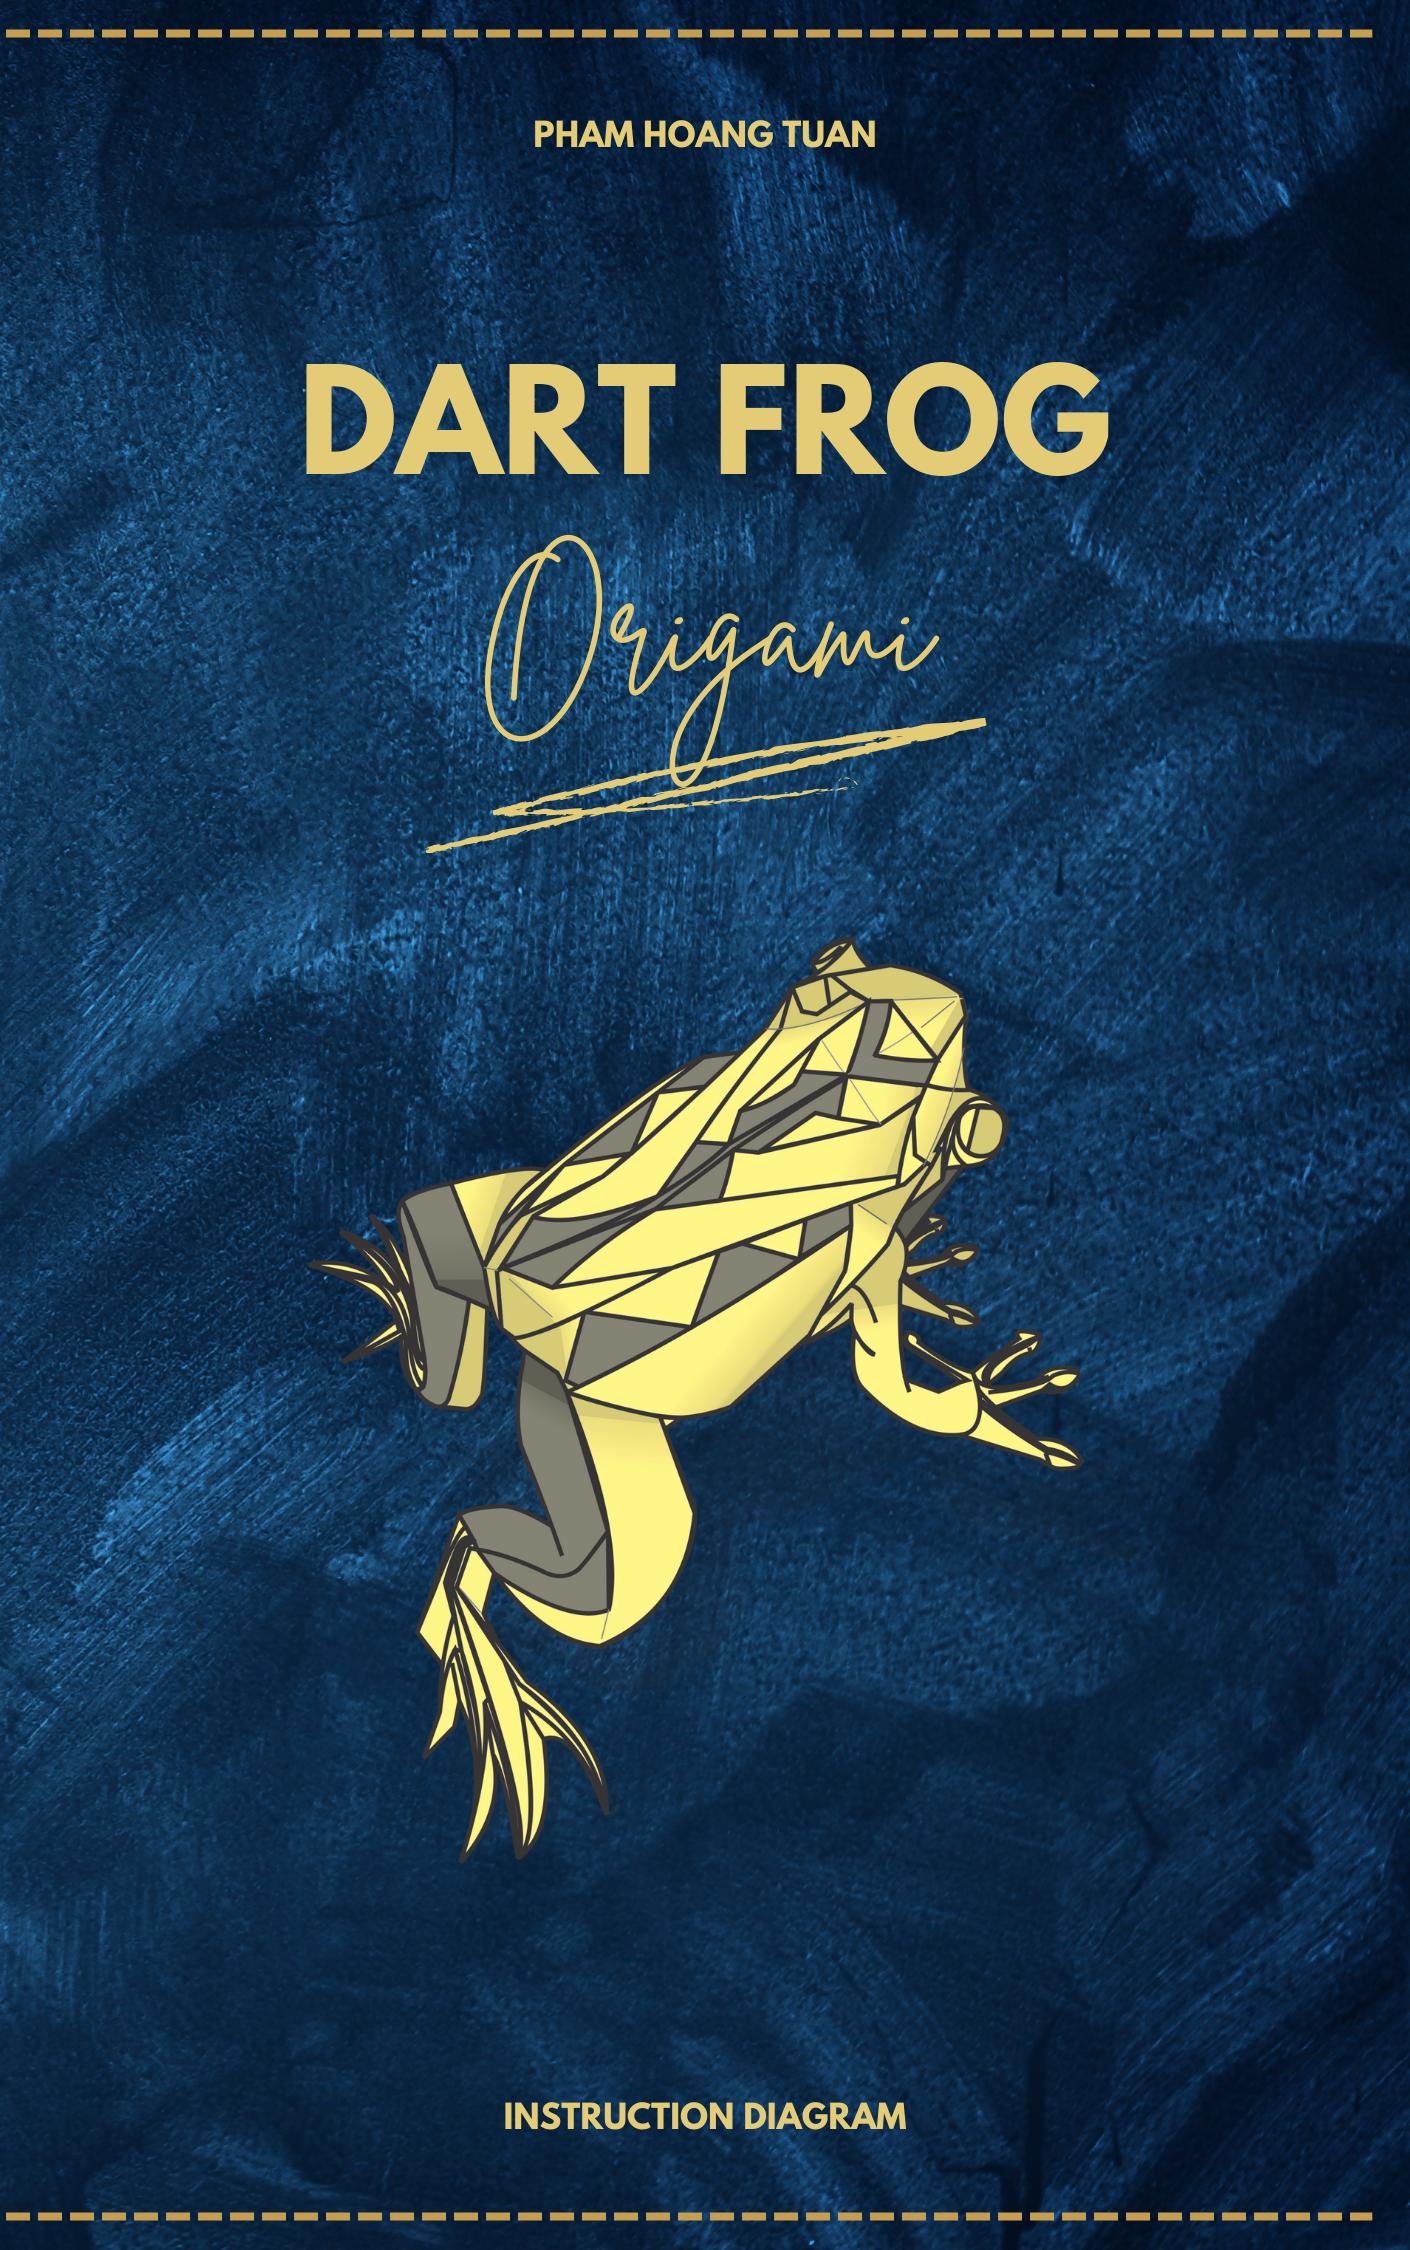 ORIGAMI DART FROG INSTRUCTION DIAGRAM - ORIGAMI FROG EBOOK